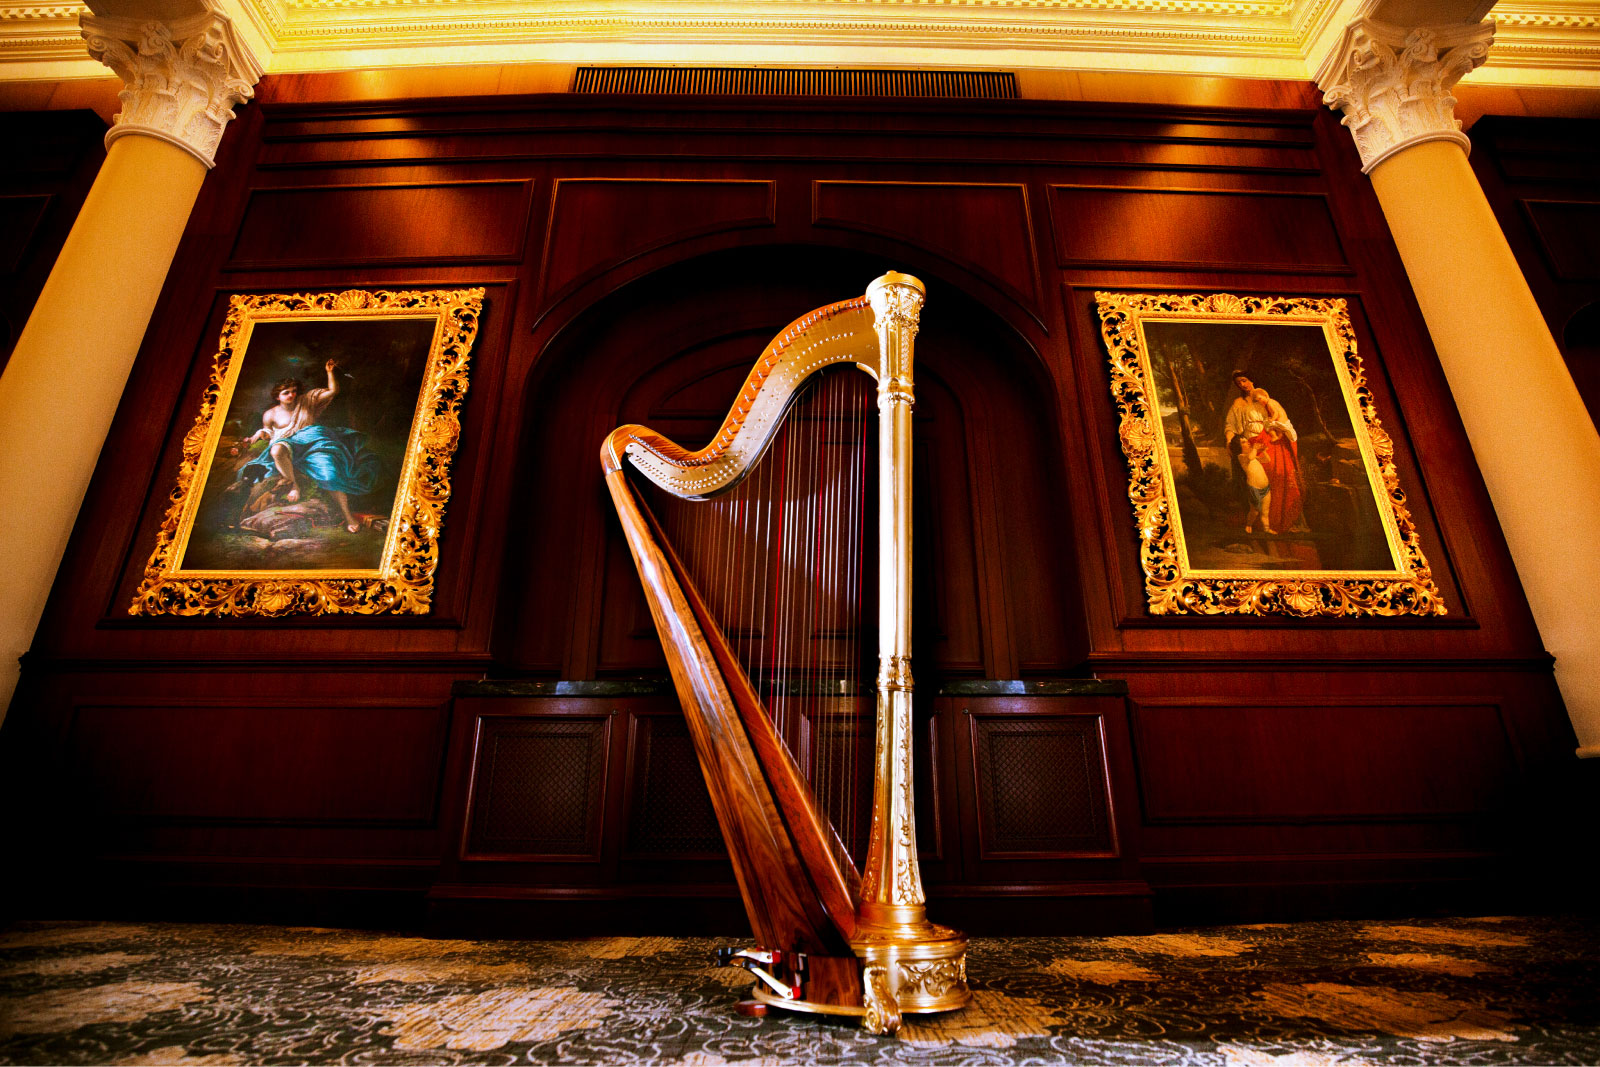 The Chateau Harp